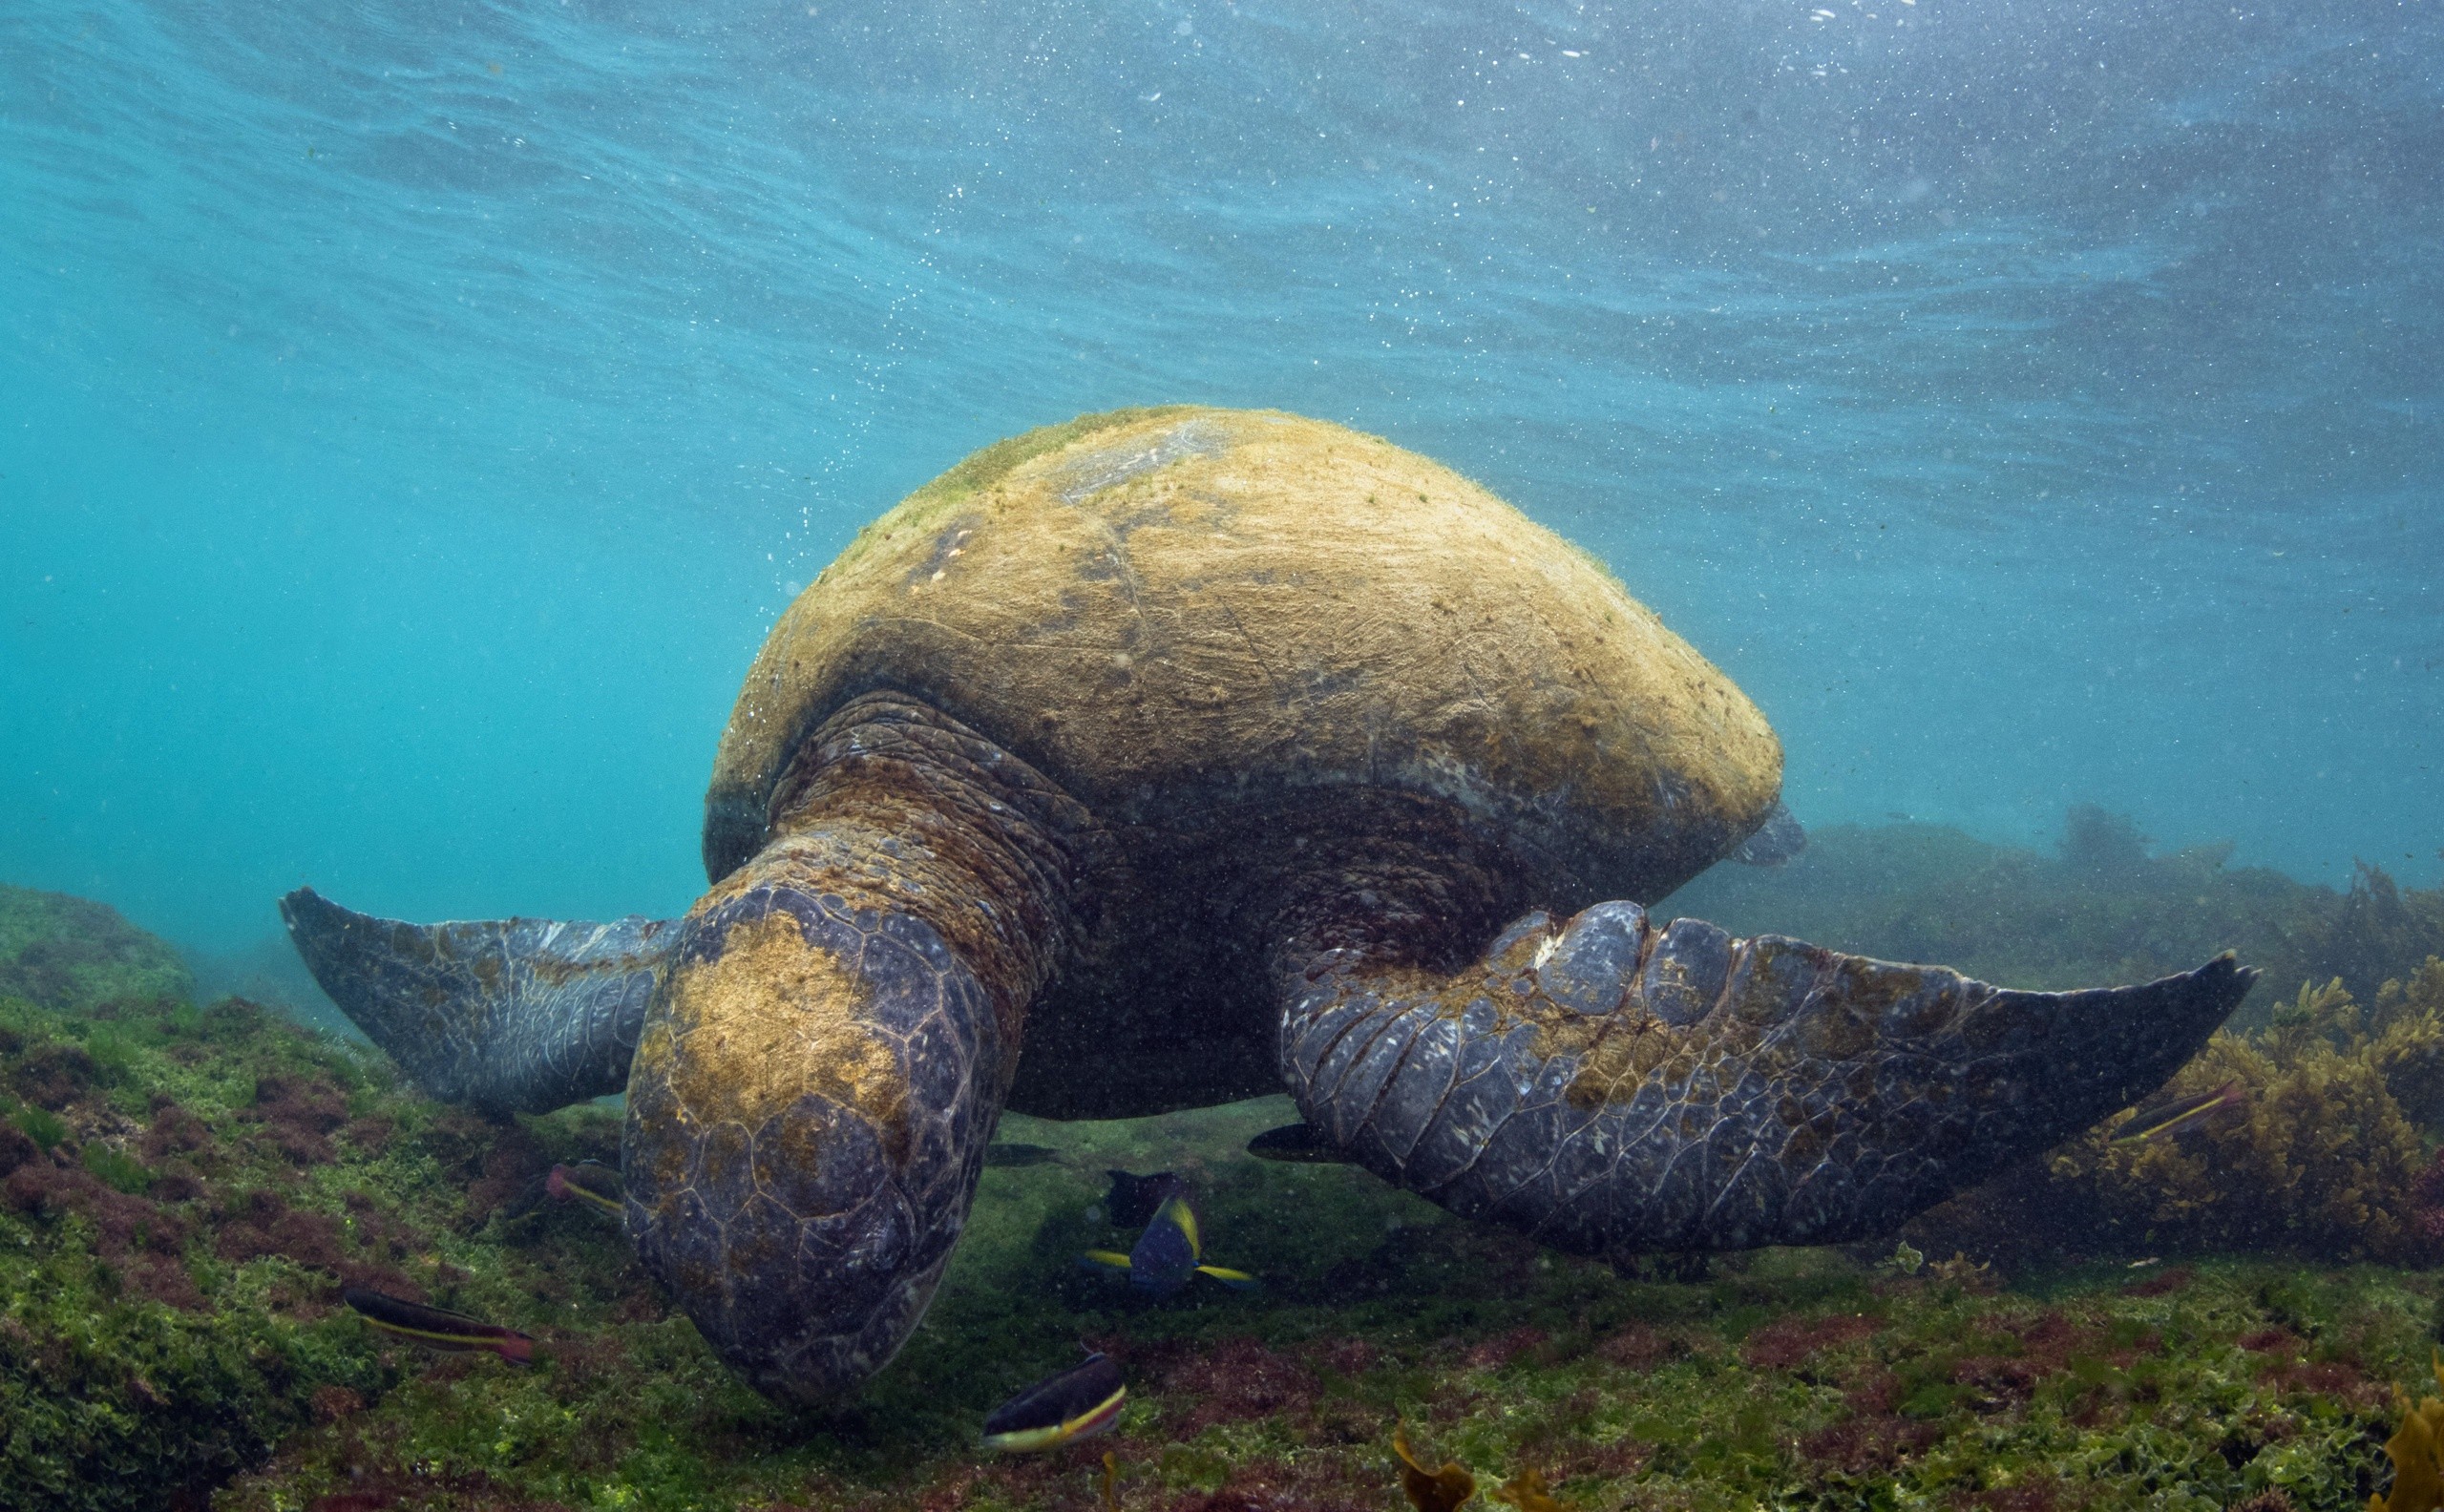 General 2560x1584 animals sea turtle underwater islas galapagos